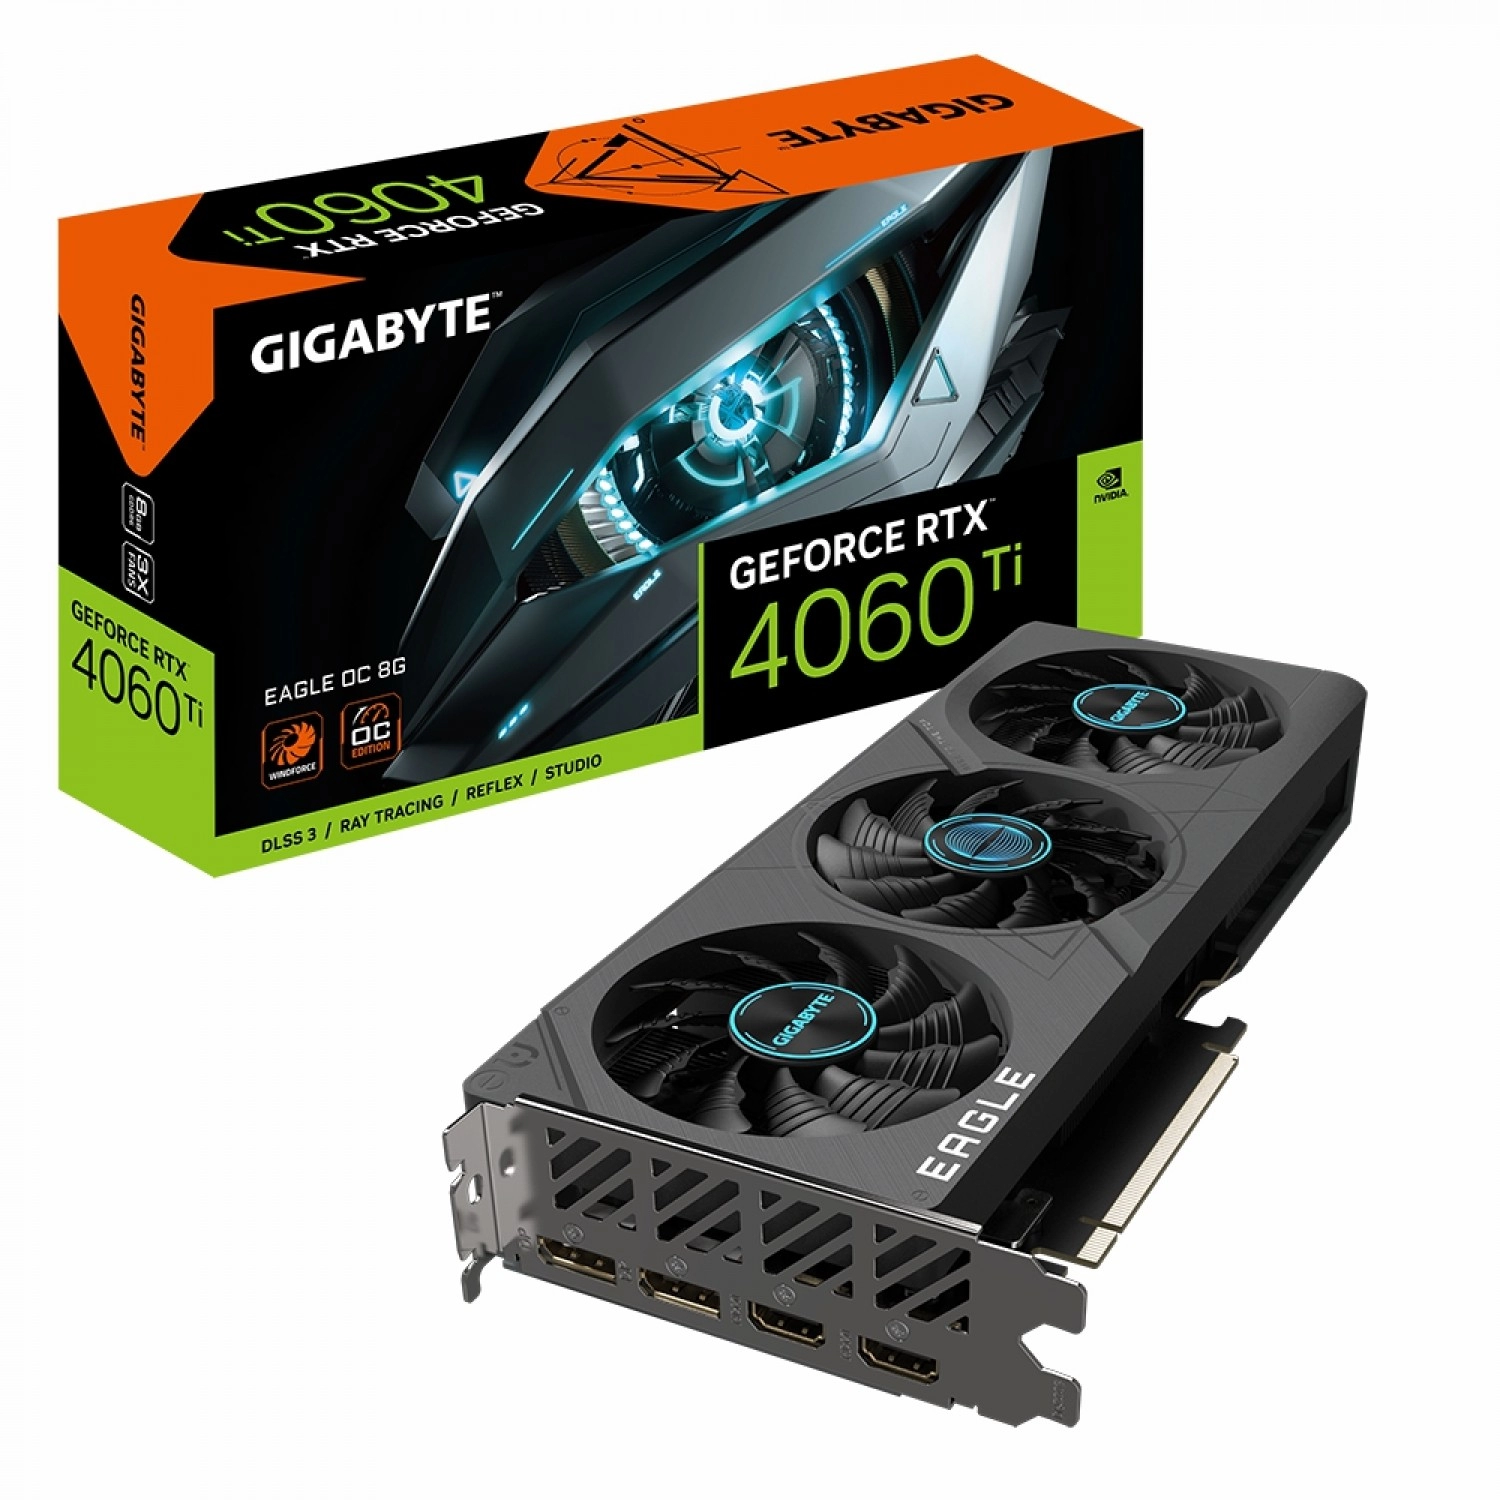 Gigabyte GeForce RTX 4060 Ti EAGLE OC 8G Package